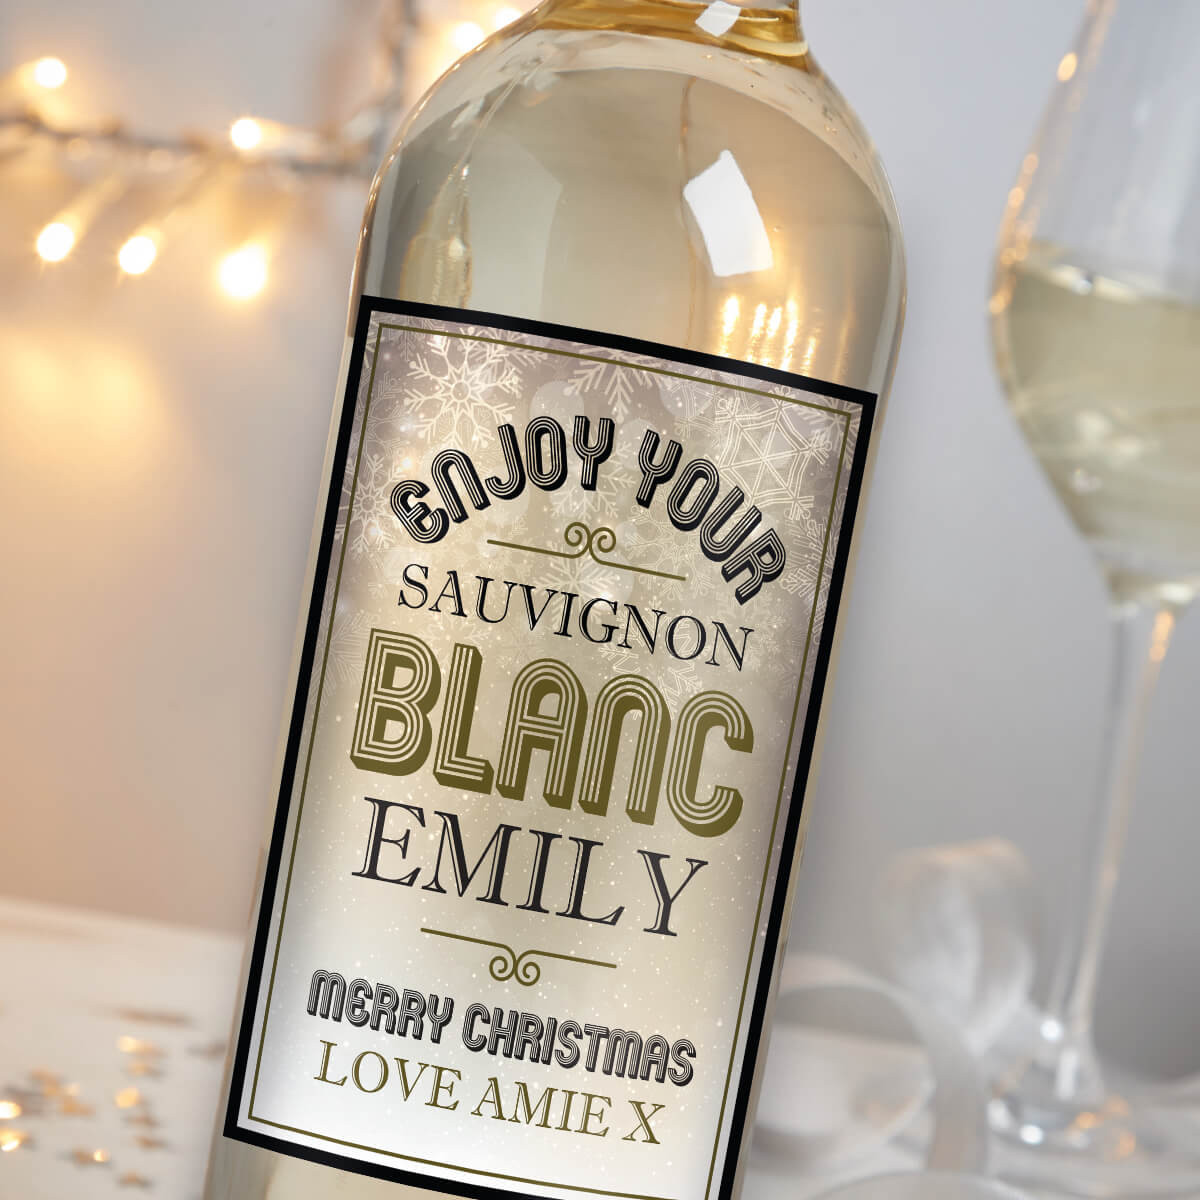 Enjoy your Christmas Sauvignon Blanc